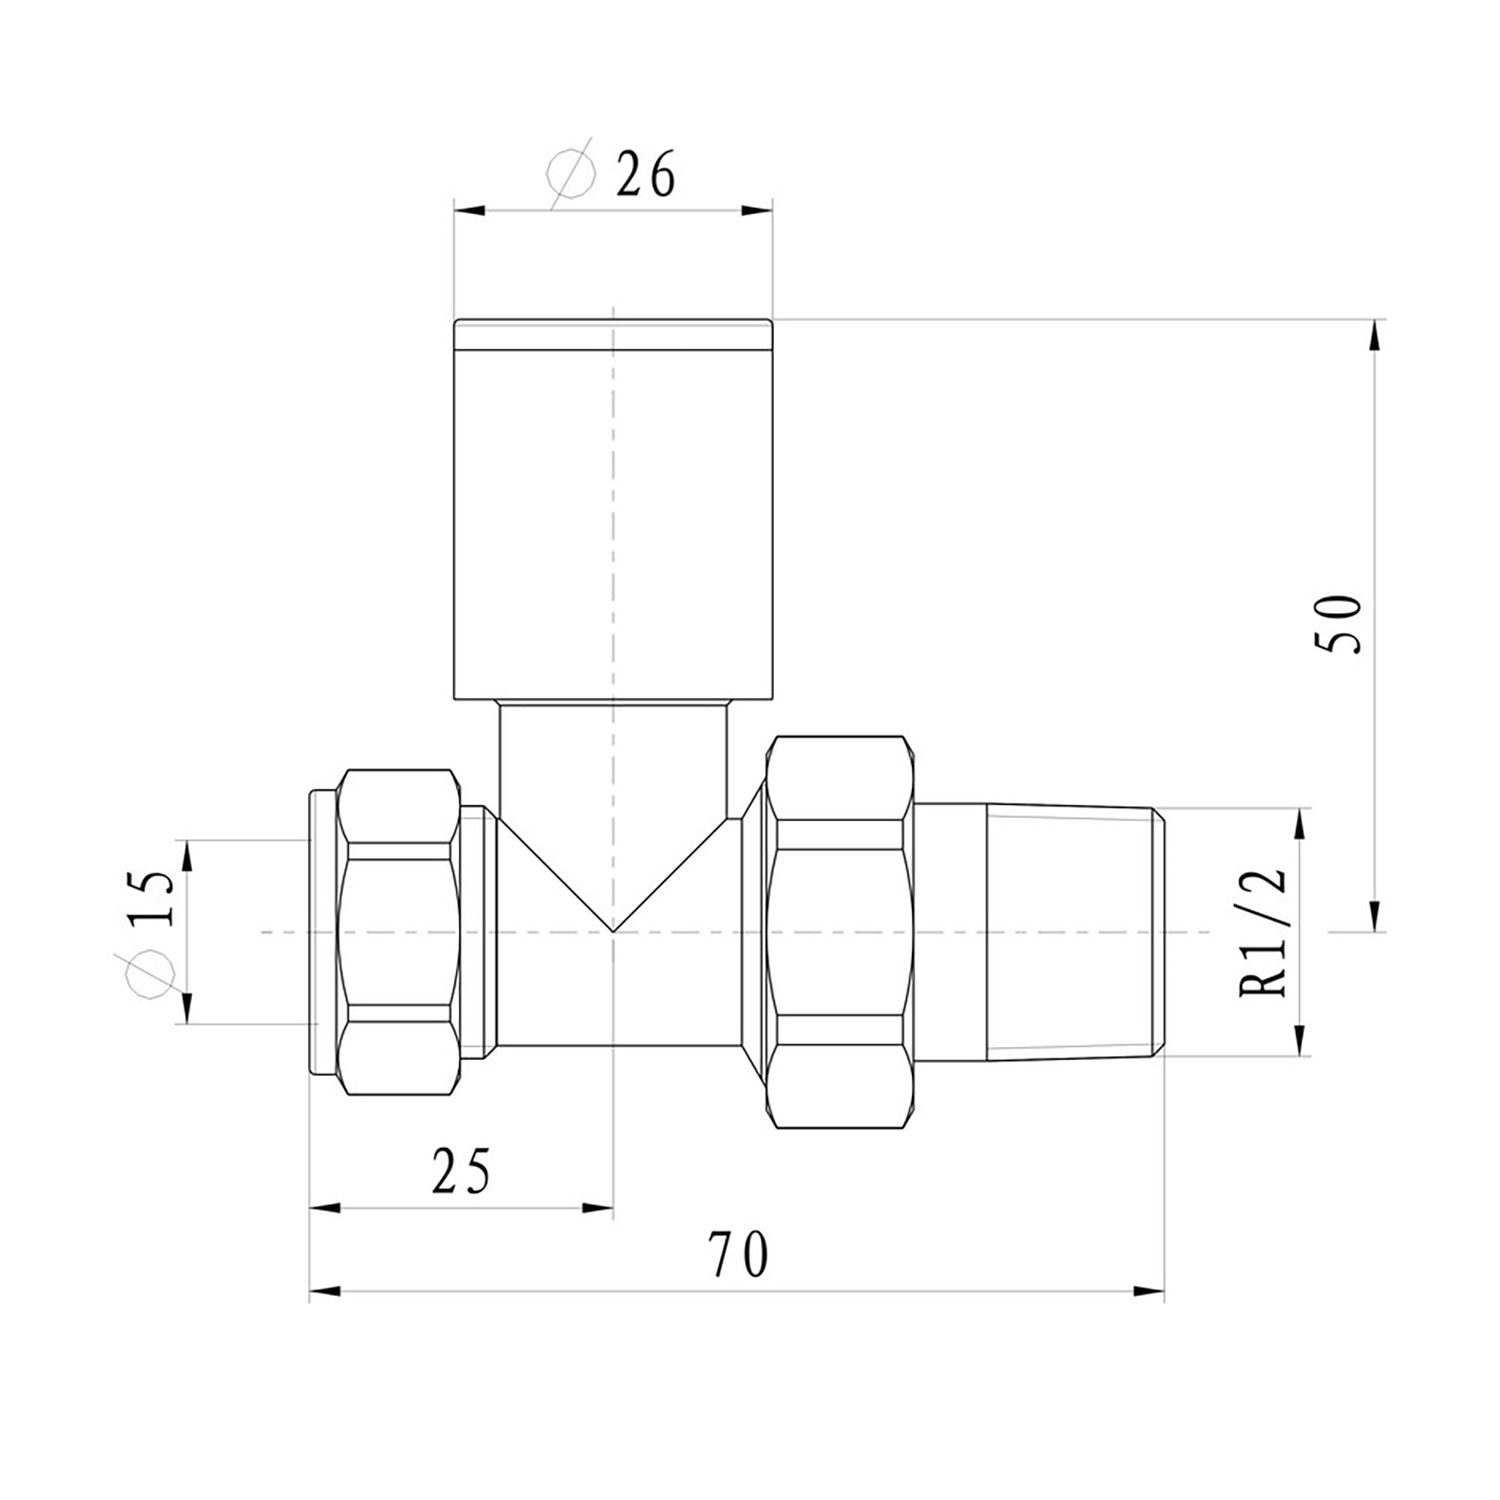 Pattern straight radiator valves - dimensions